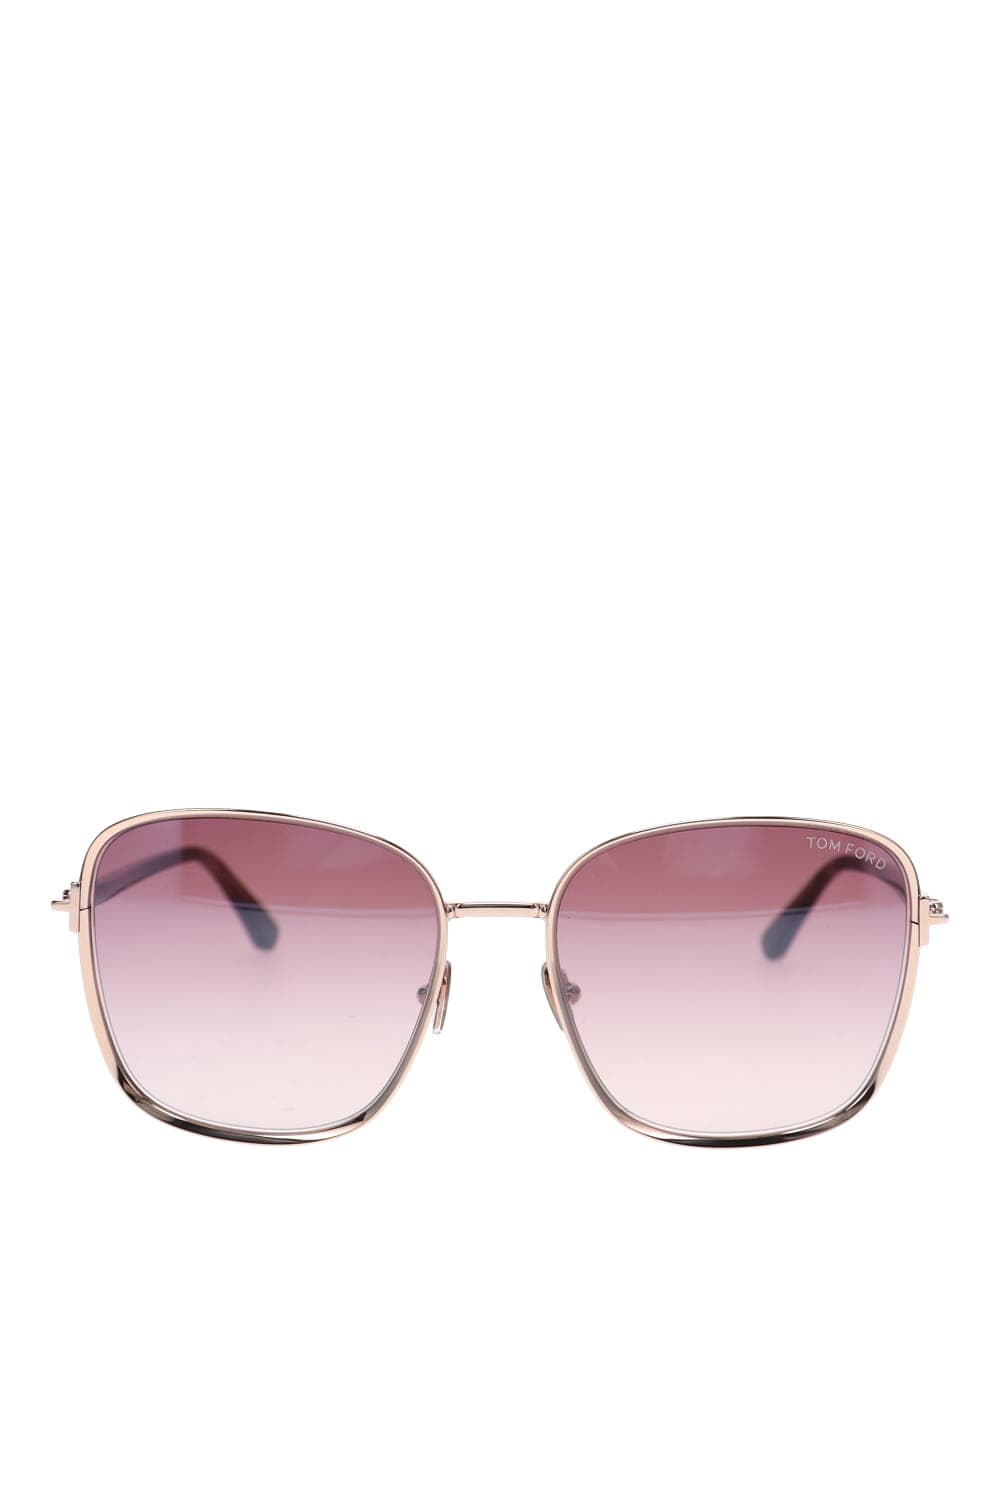 Tom Ford Eyewear FT1029 Shiny Rose Havana Sunglasses FT1029 Rose Havana